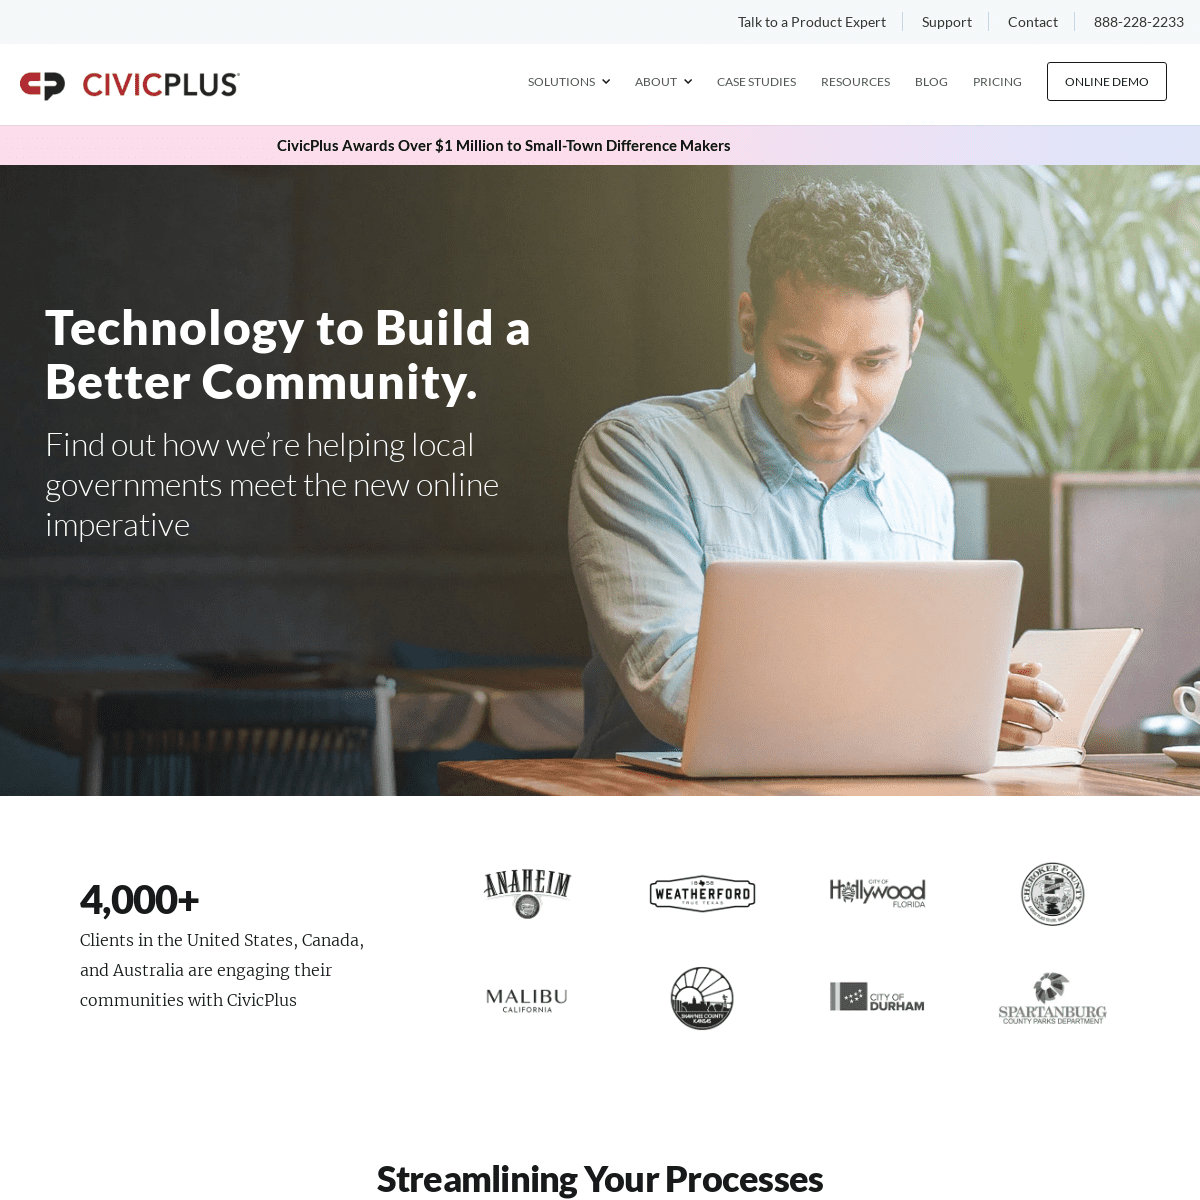 A complete backup of civicplus.com